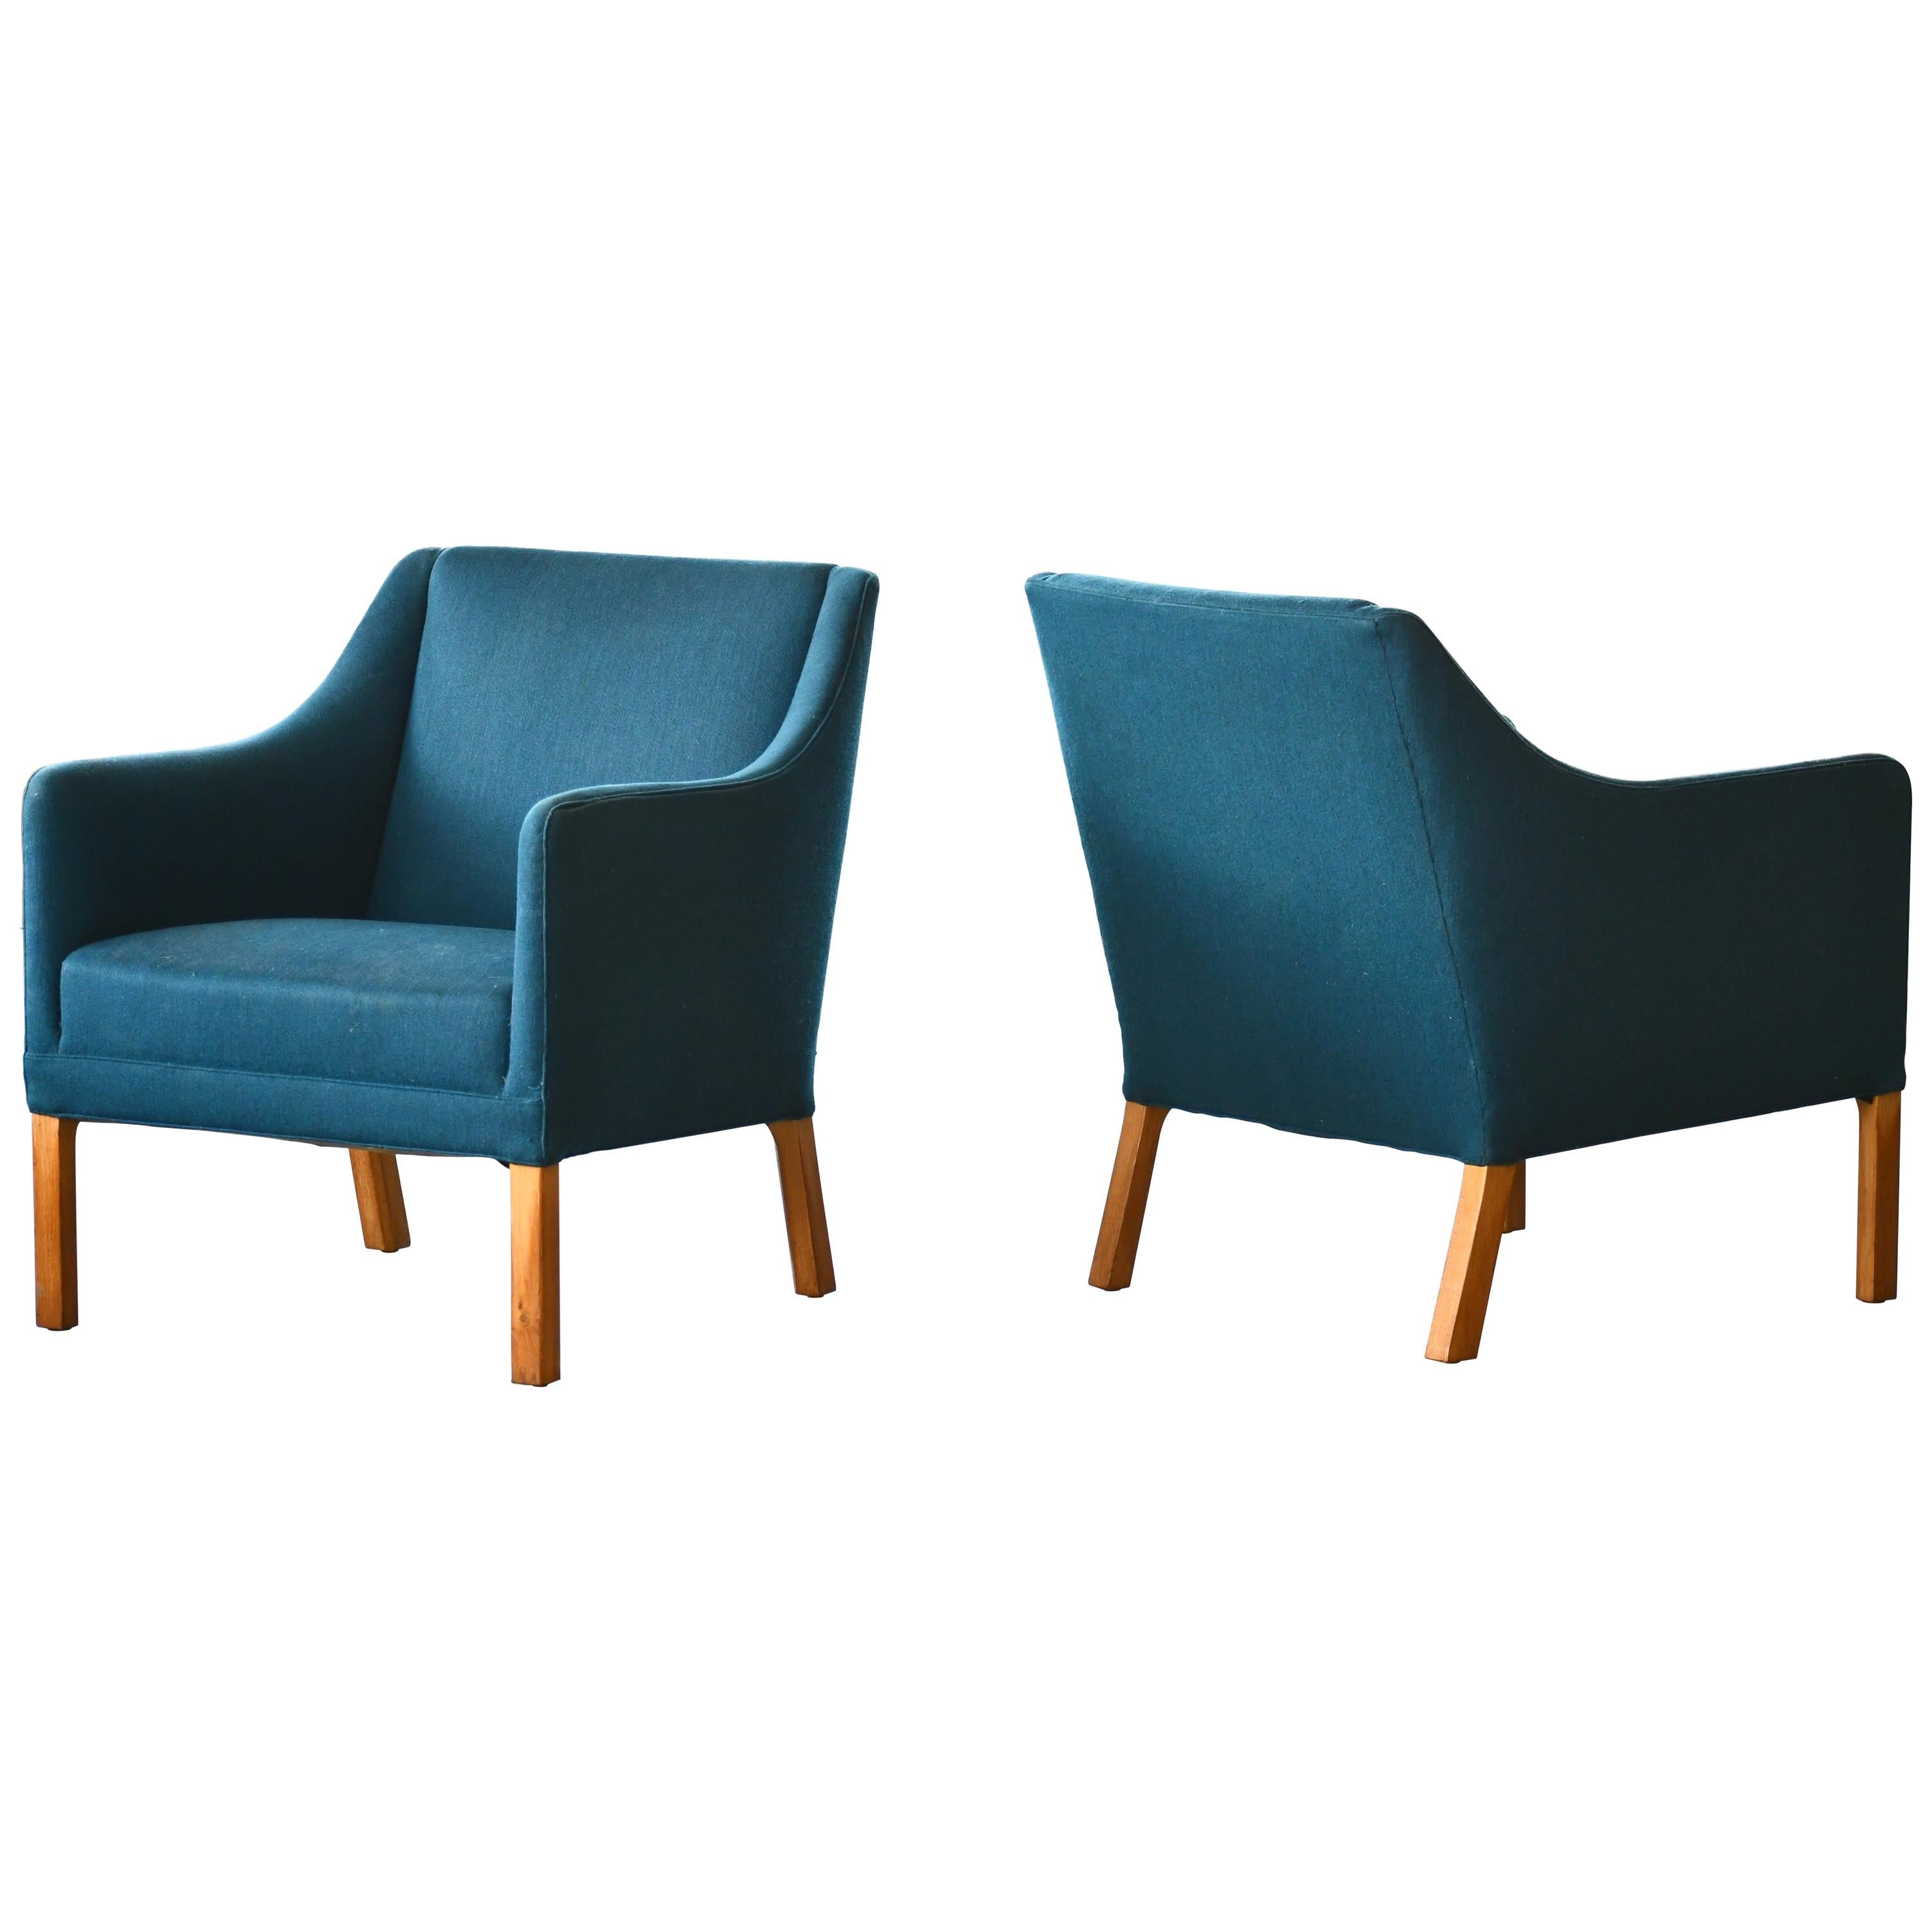 Pair of Danish Midcentury Lounge Chairs Attributed to Ejnar Larsen & Axel Bender